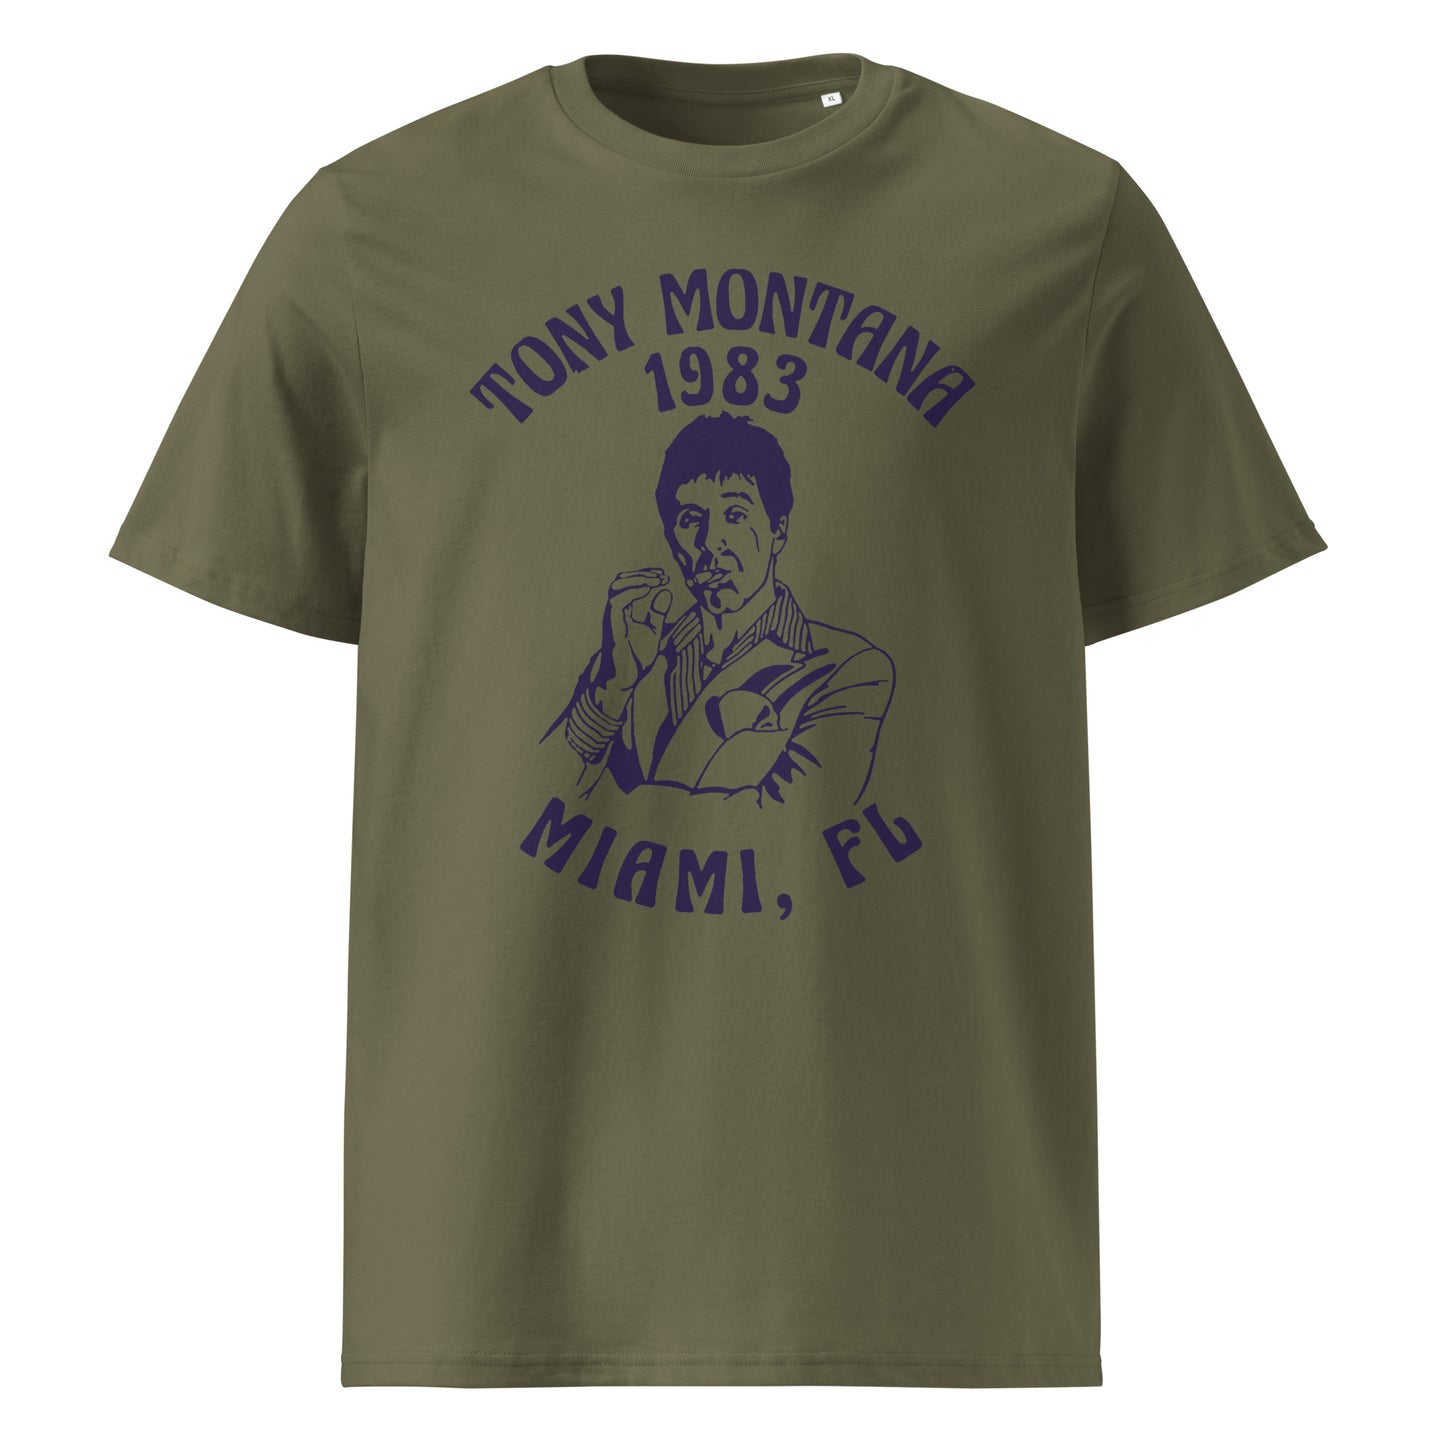 TONY MONTANA 1983 - Unisex organic cotton t-shirt